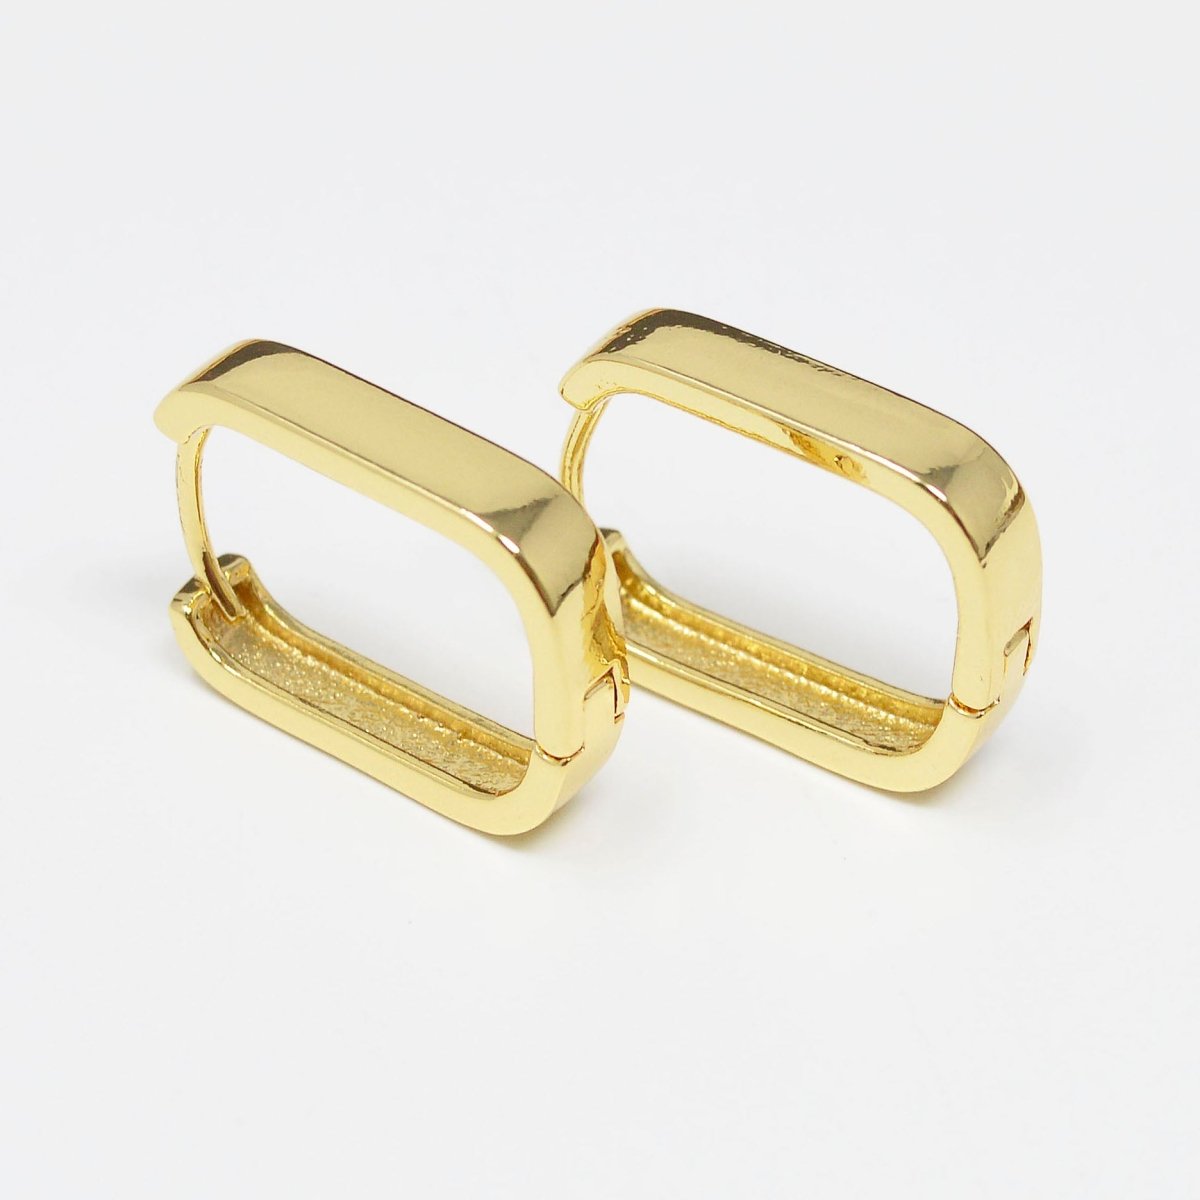 14K Gold Filled Hoop Earrings, Classic Oval Hoops in Gold w/ Click Lock Closure Lightweight Tube Minimalist Earrings U Shaped Hoops Q-429 - DLUXCA